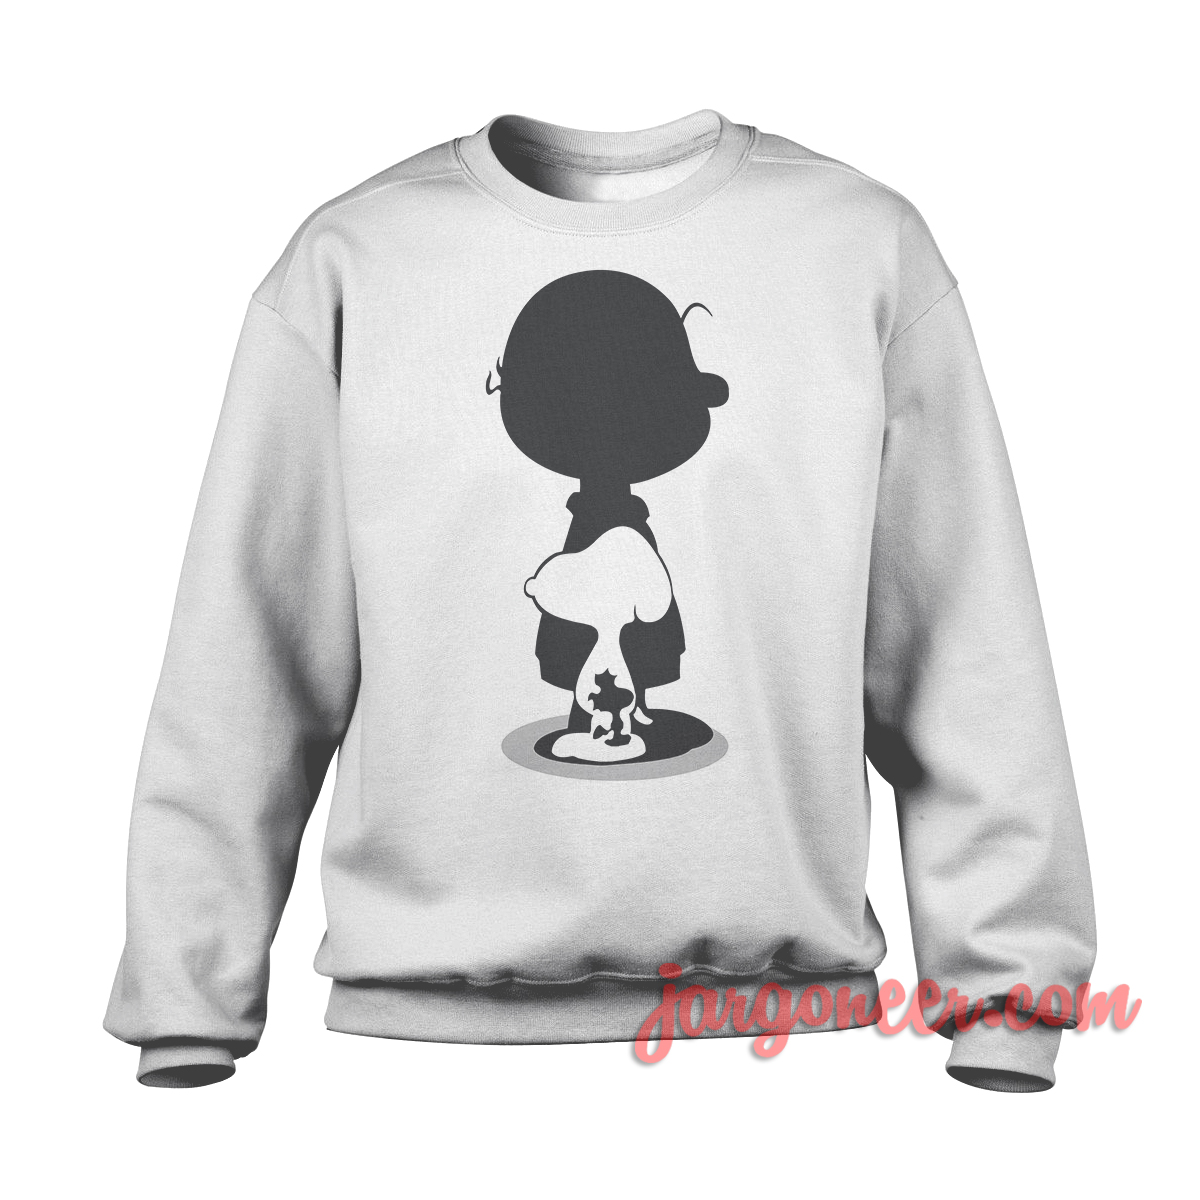 The Peanuts Silhouette White SS - Shop Unique Graphic Cool Shirt Designs